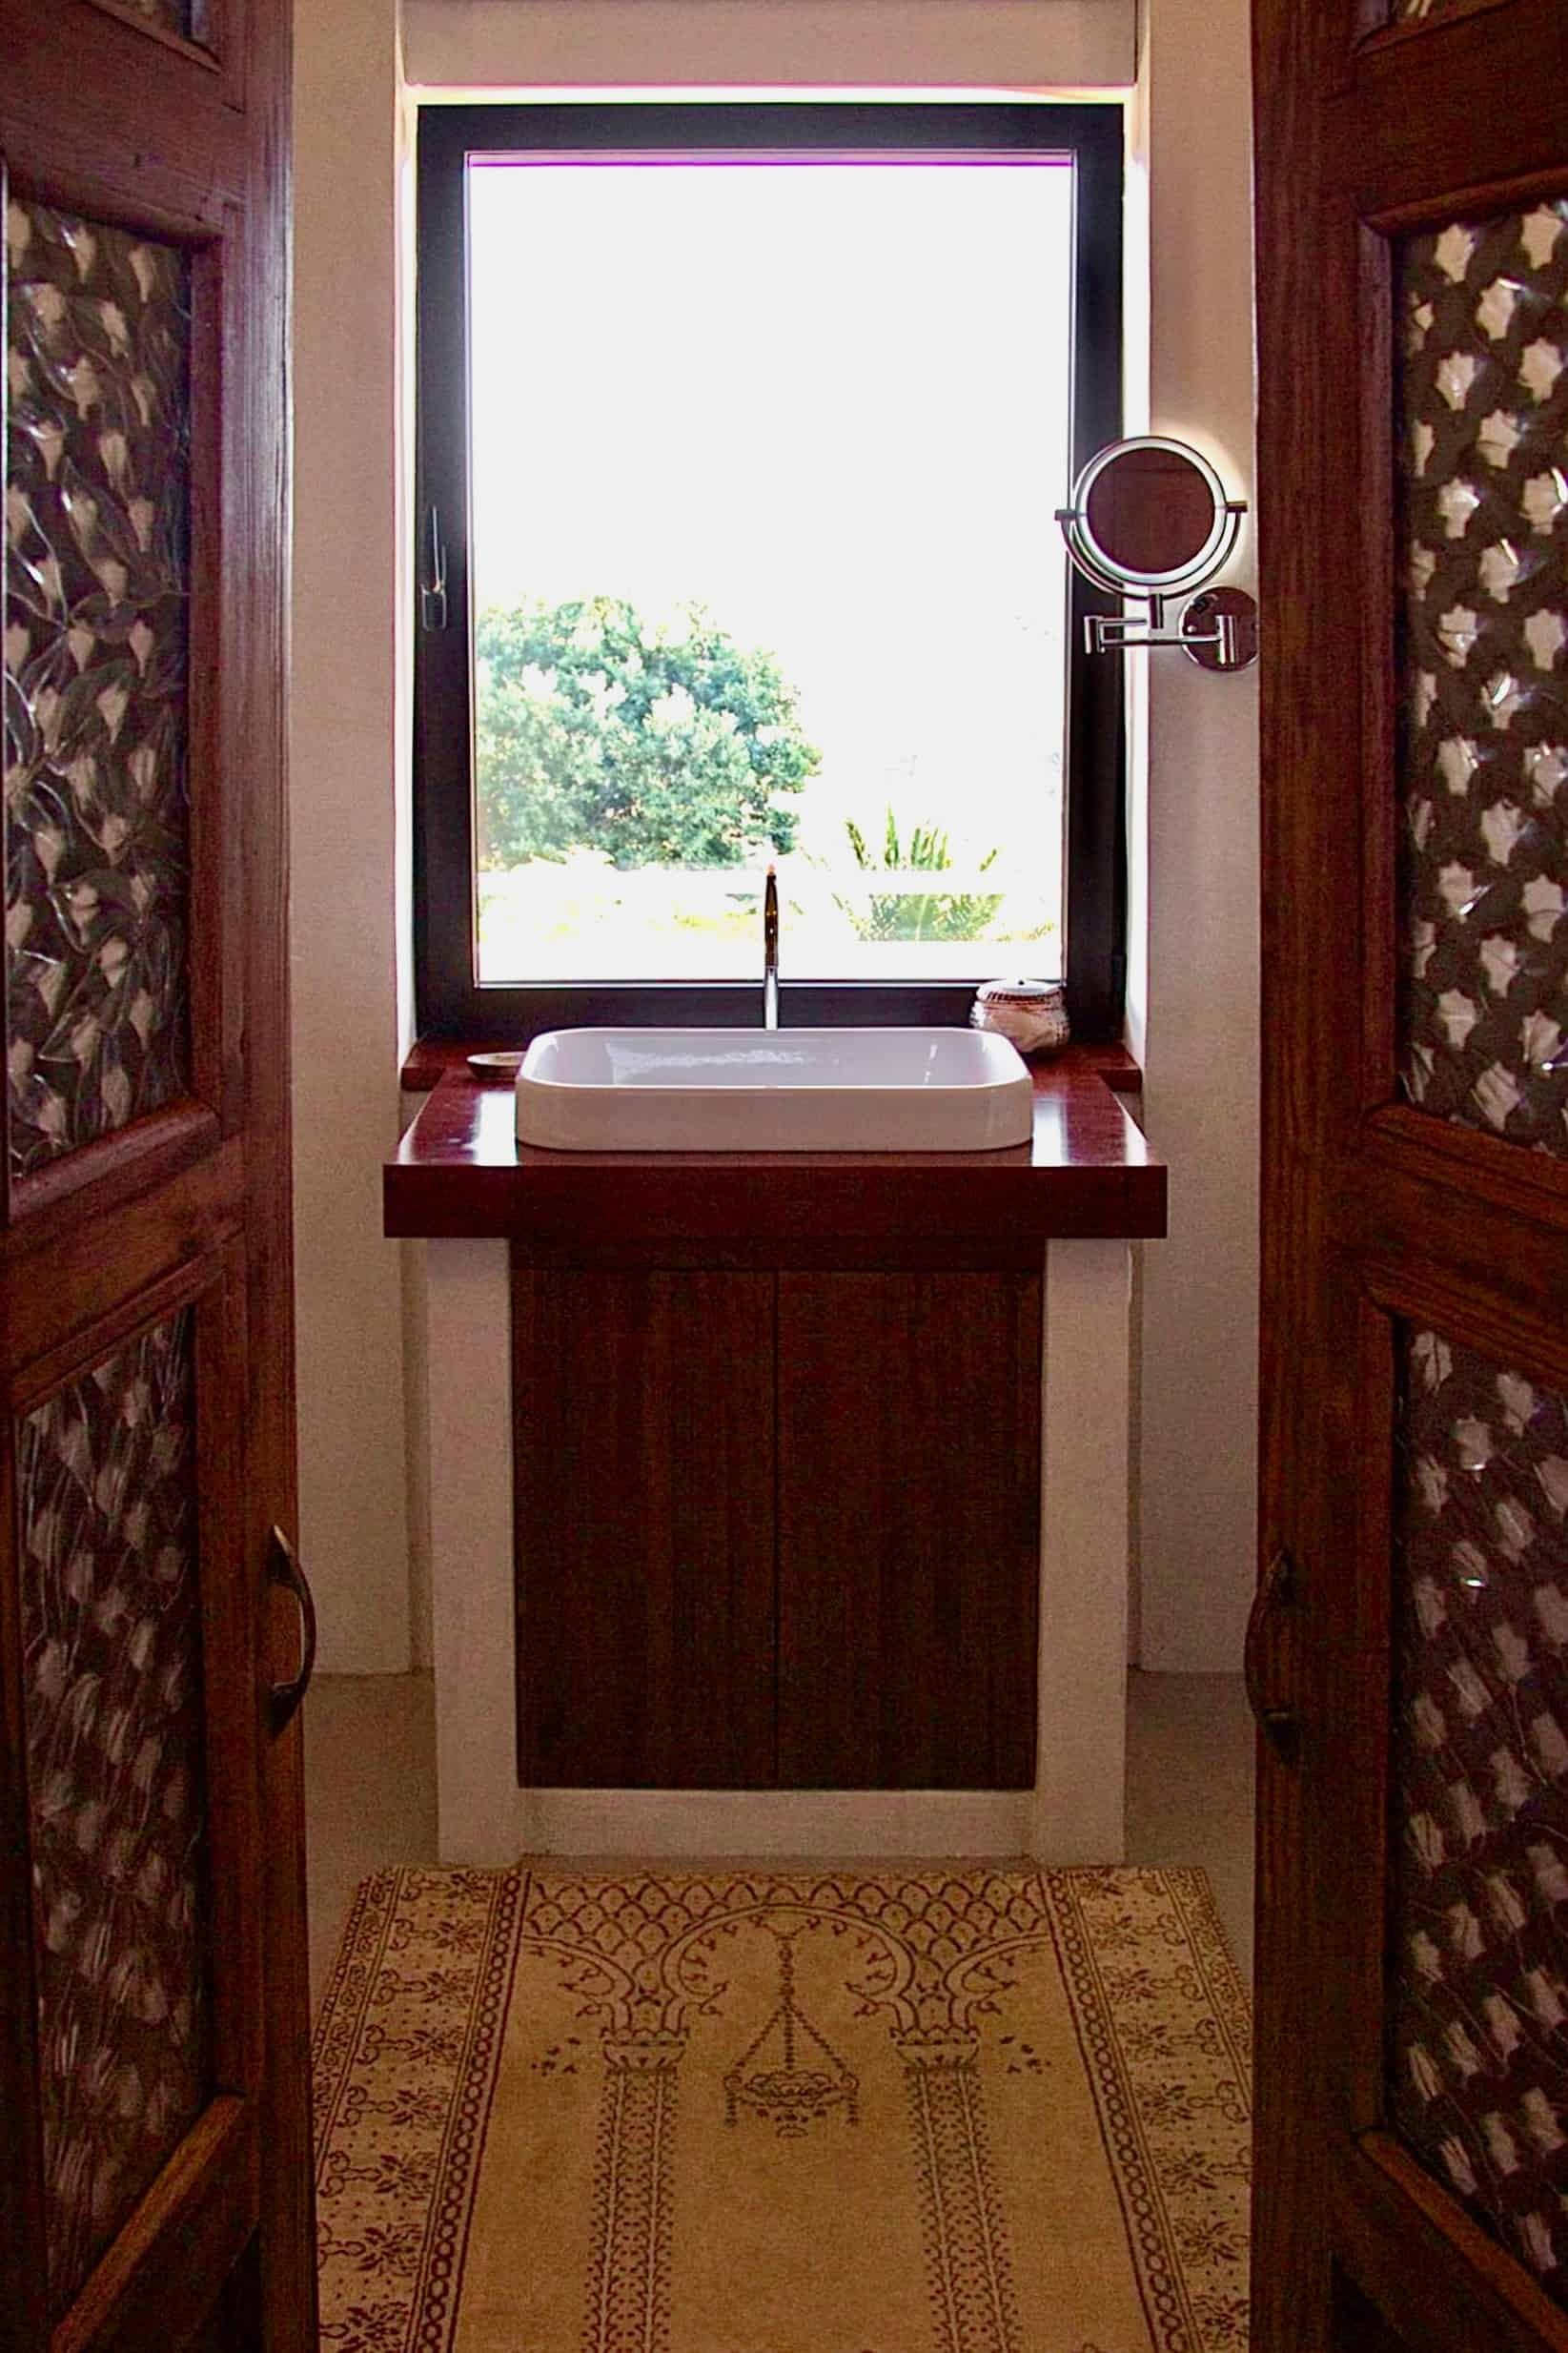 sander-scholte-architect-design-studio-the-bathroom-fotos-IMG_0562.jpeg